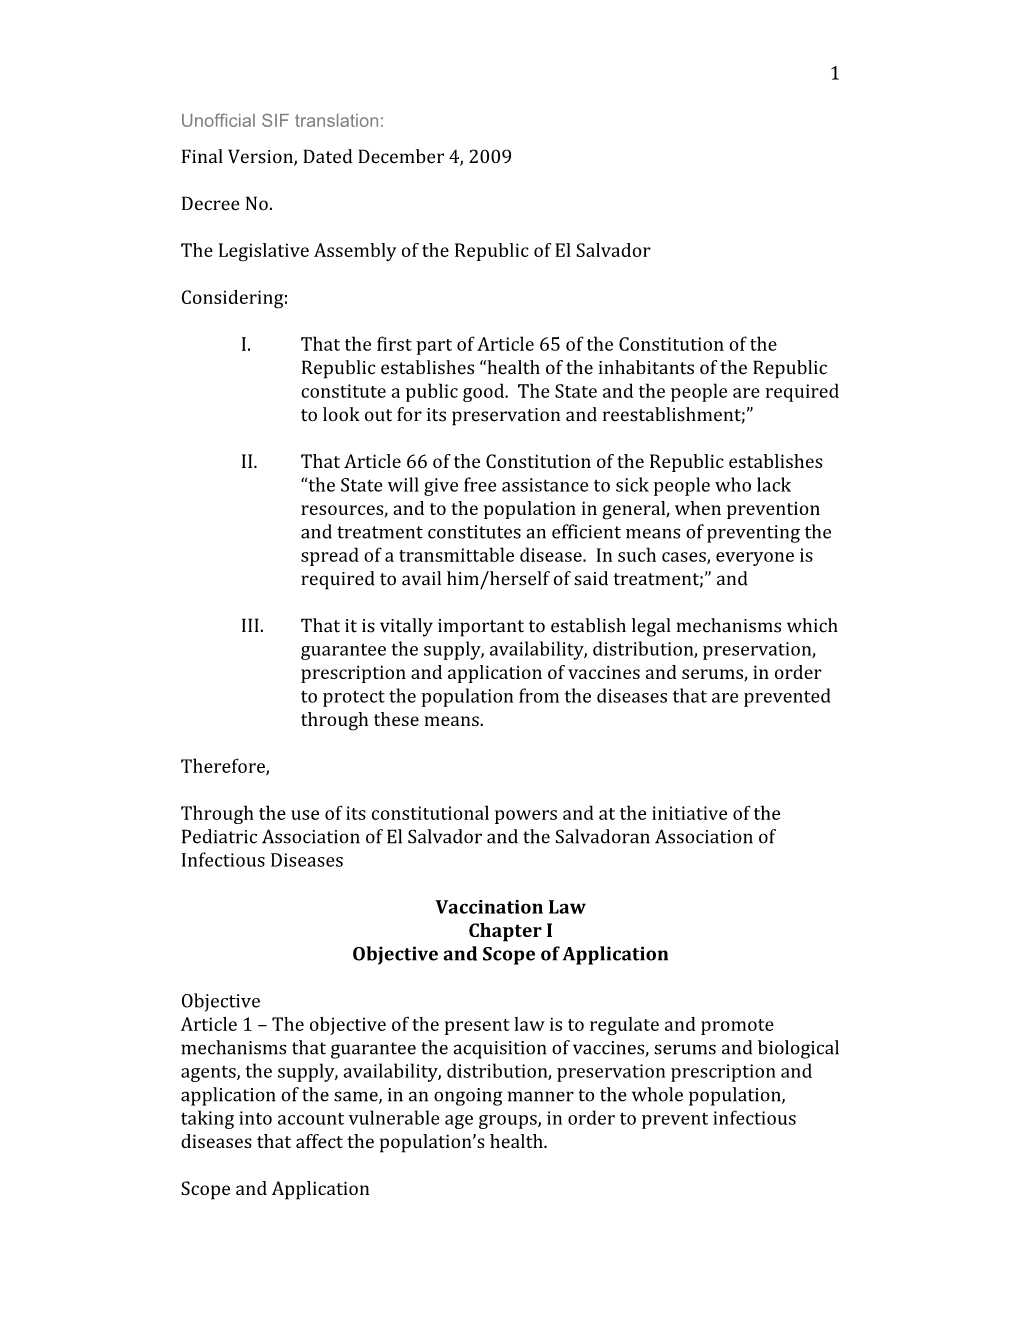 1 Final Version, Dated December 4, 2009 Decree No. the Legislative